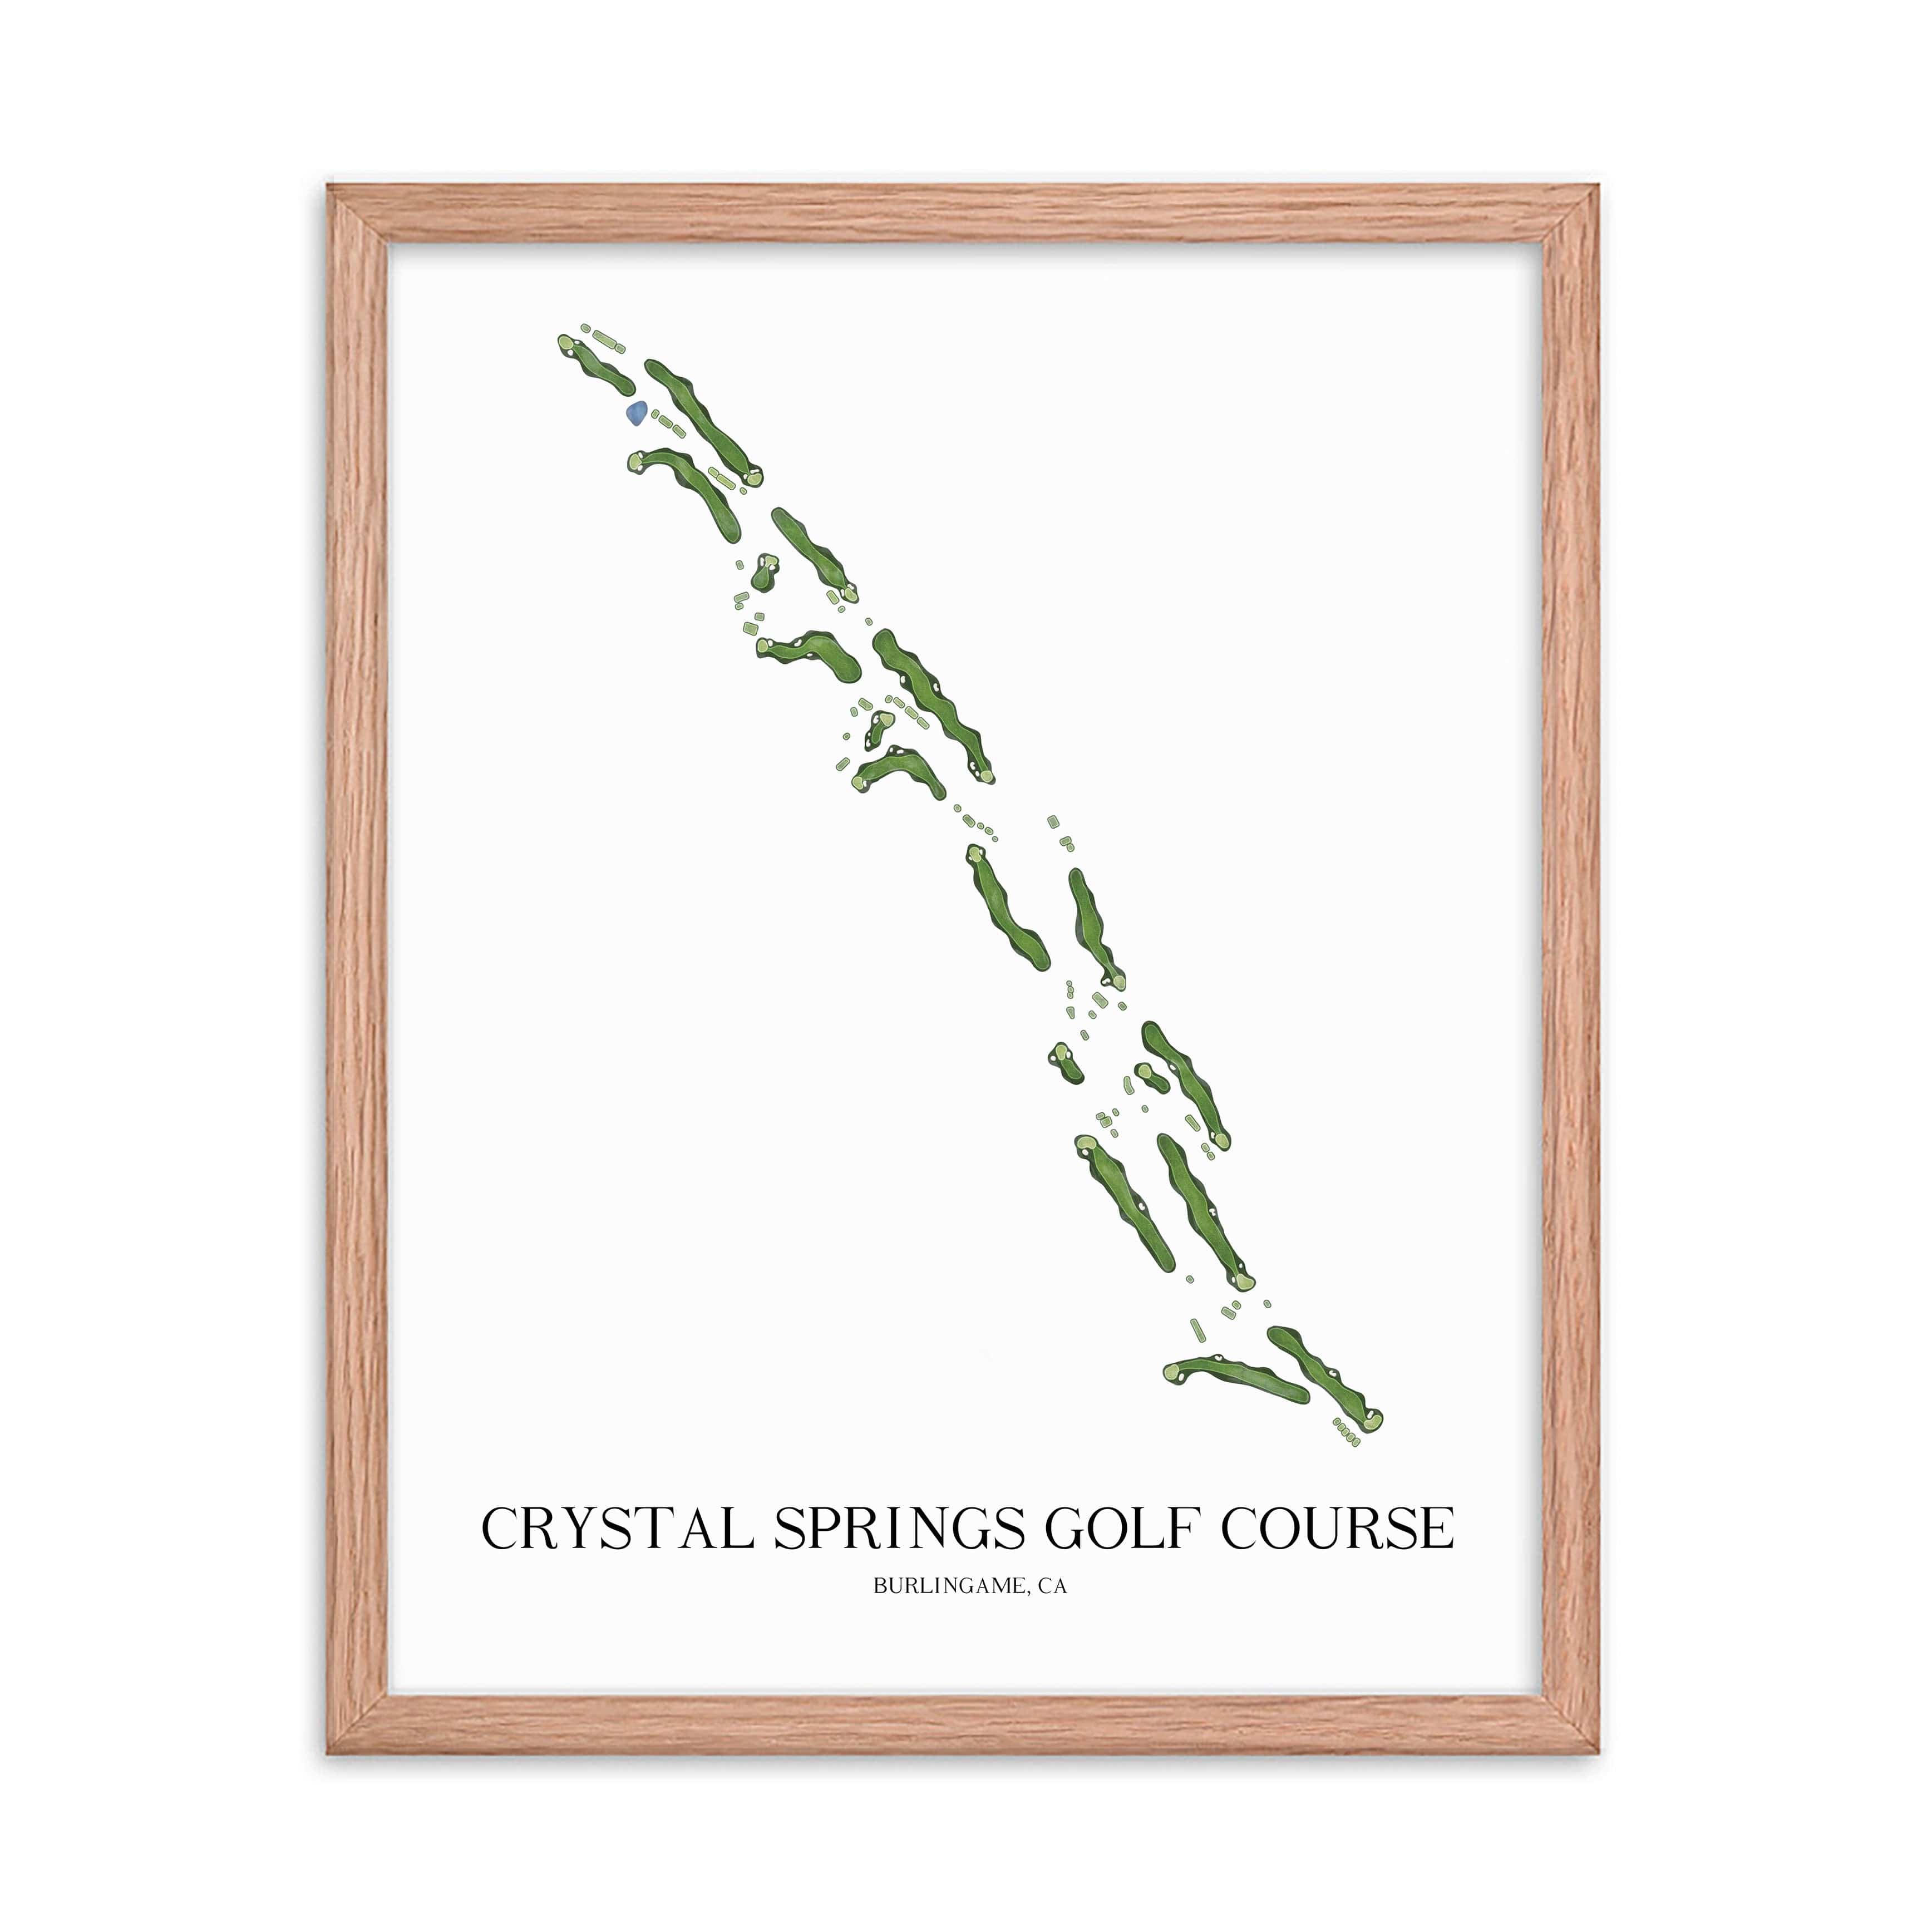 The 19th Hole Golf Shop - Golf Course Prints -  Crystal Springs Golf Course Golf Course Map